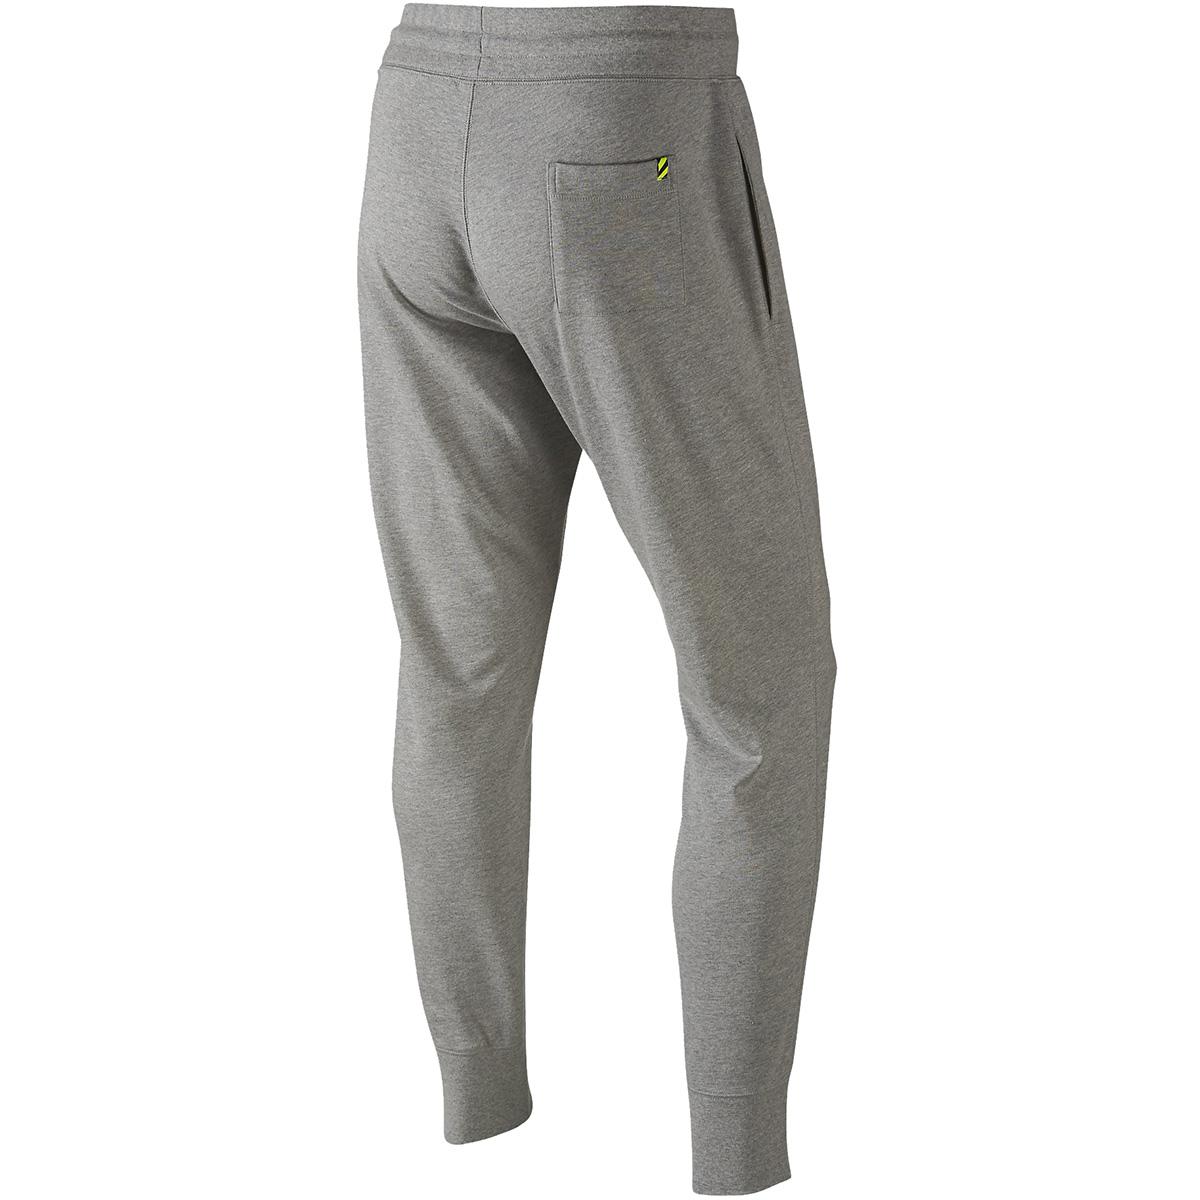 Nike Mens Track and Field Slim Cuff Pants - Dark Grey Heather ...